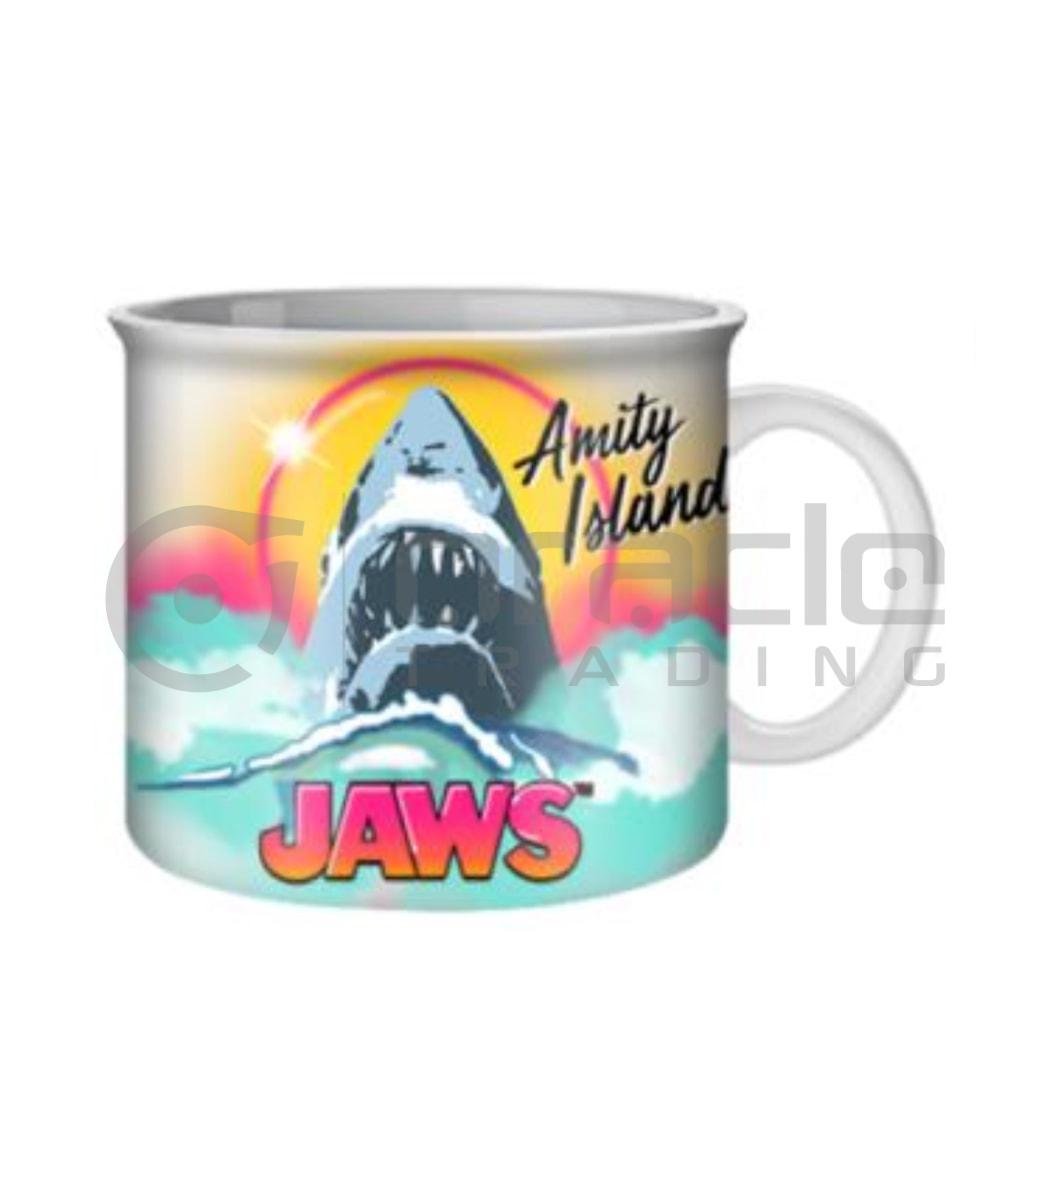 Jaws Jumbo Camper Mug - Sunset